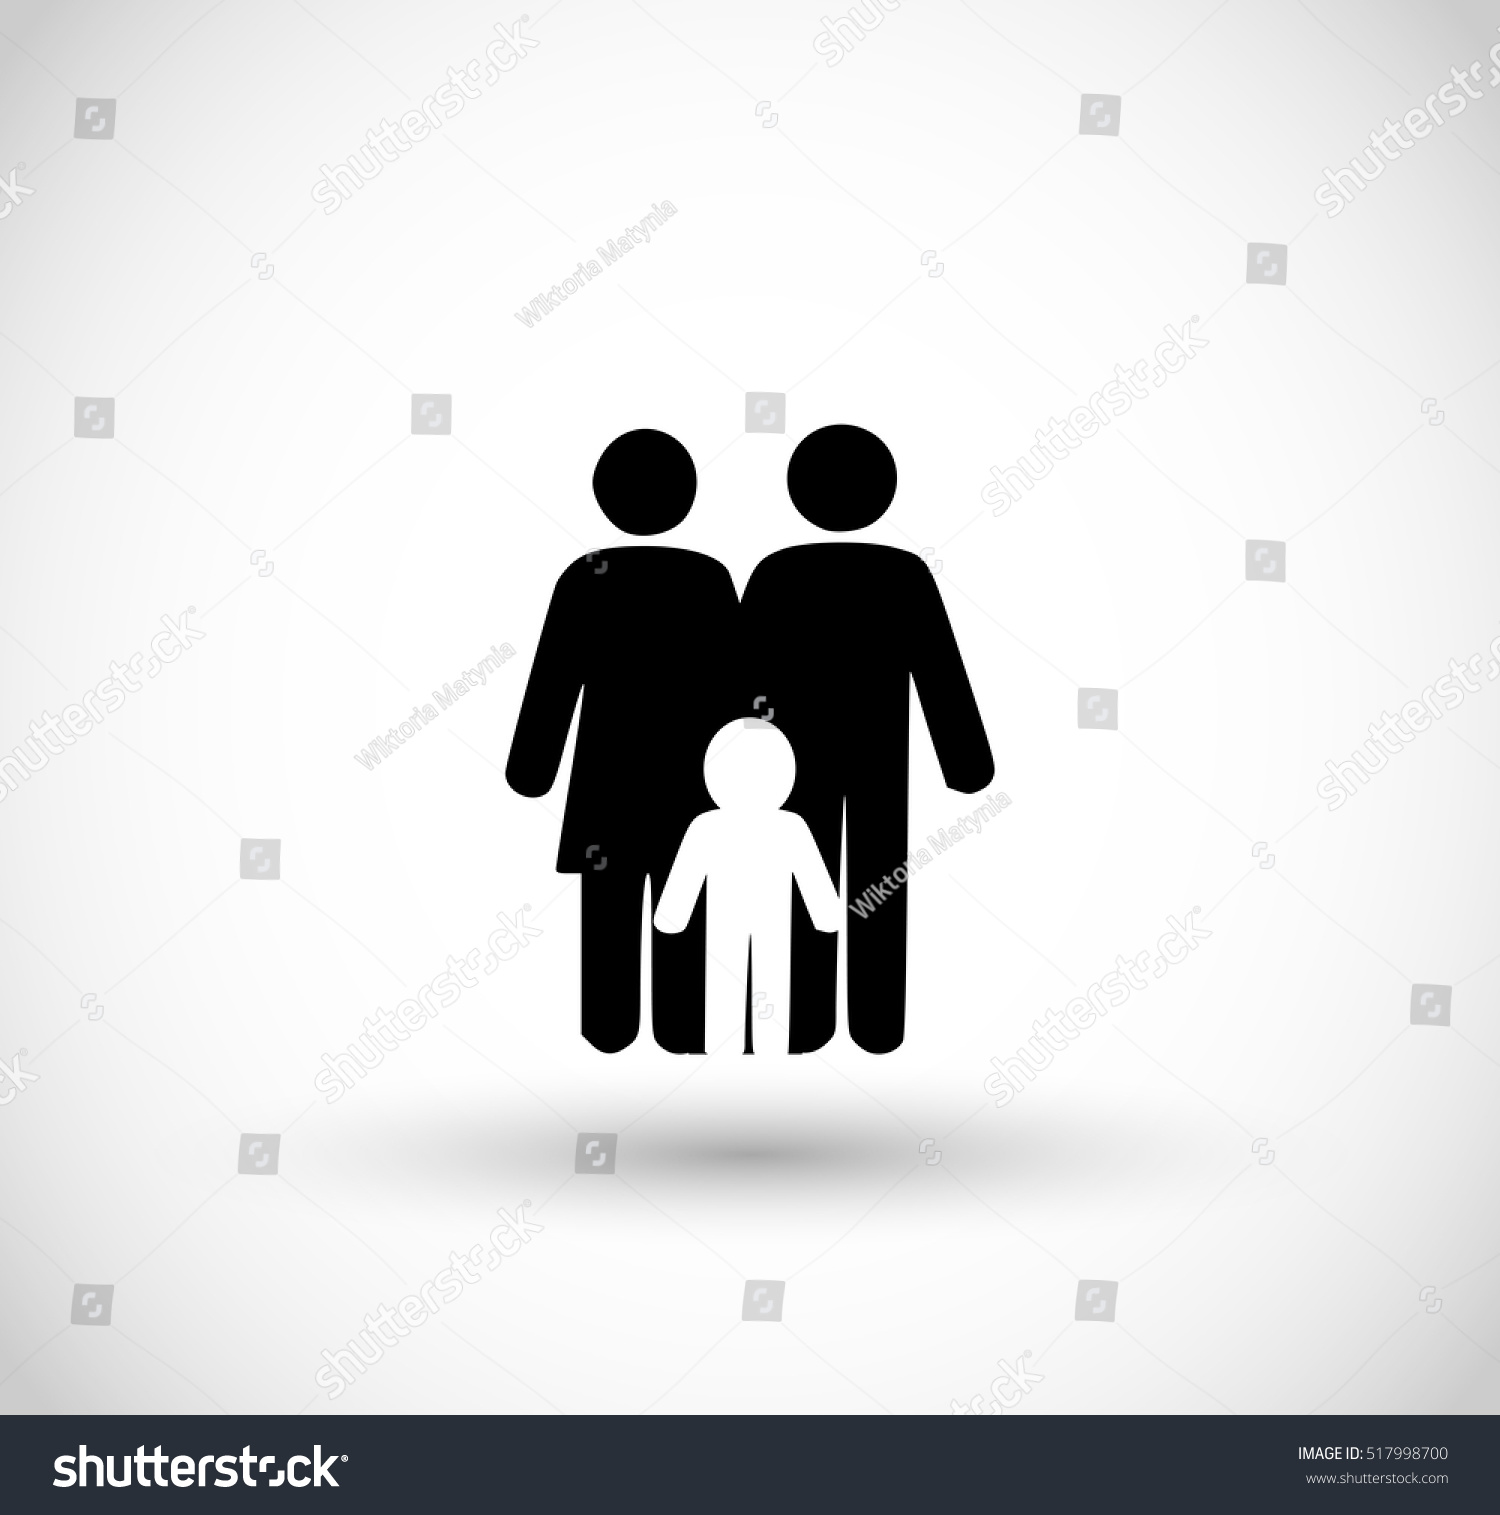 Family Icon Vector - 517998700 : Shutterstock